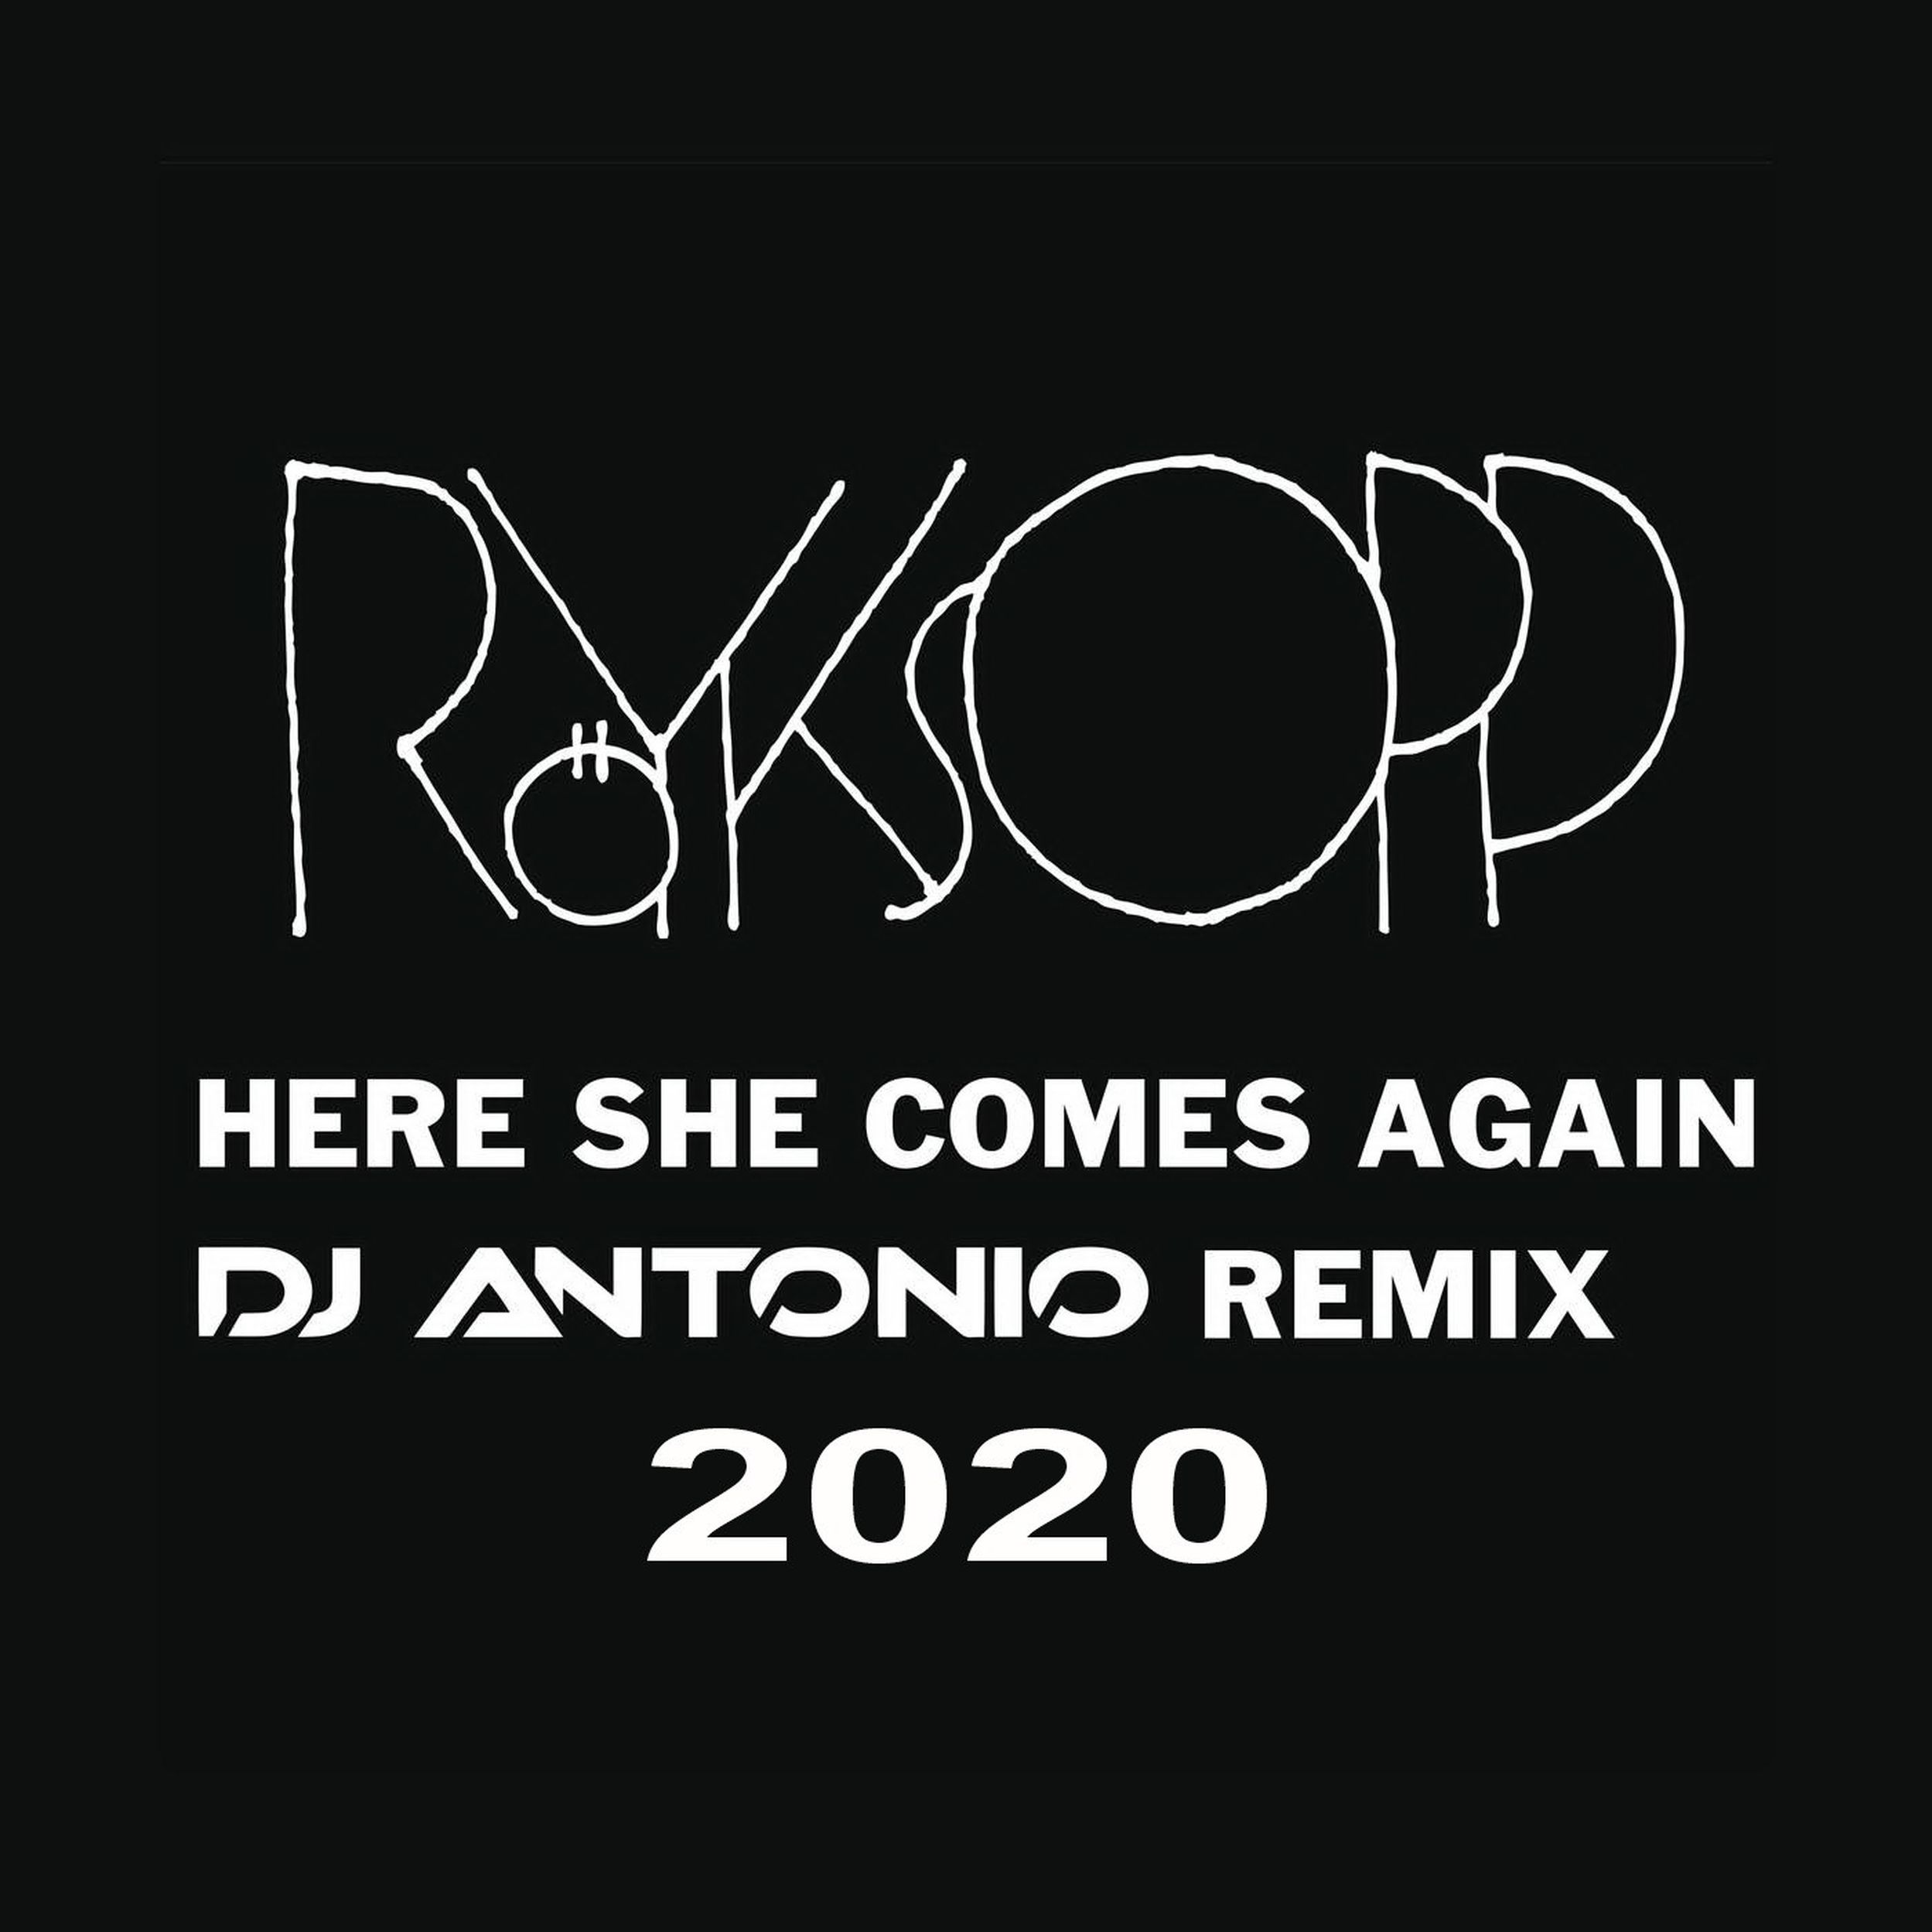 Royksopp she comes again mp3. Here she comes again. Here she comes again (DJ Antonio Remix). Royksopp here she comes again. Royksopp here comes again.